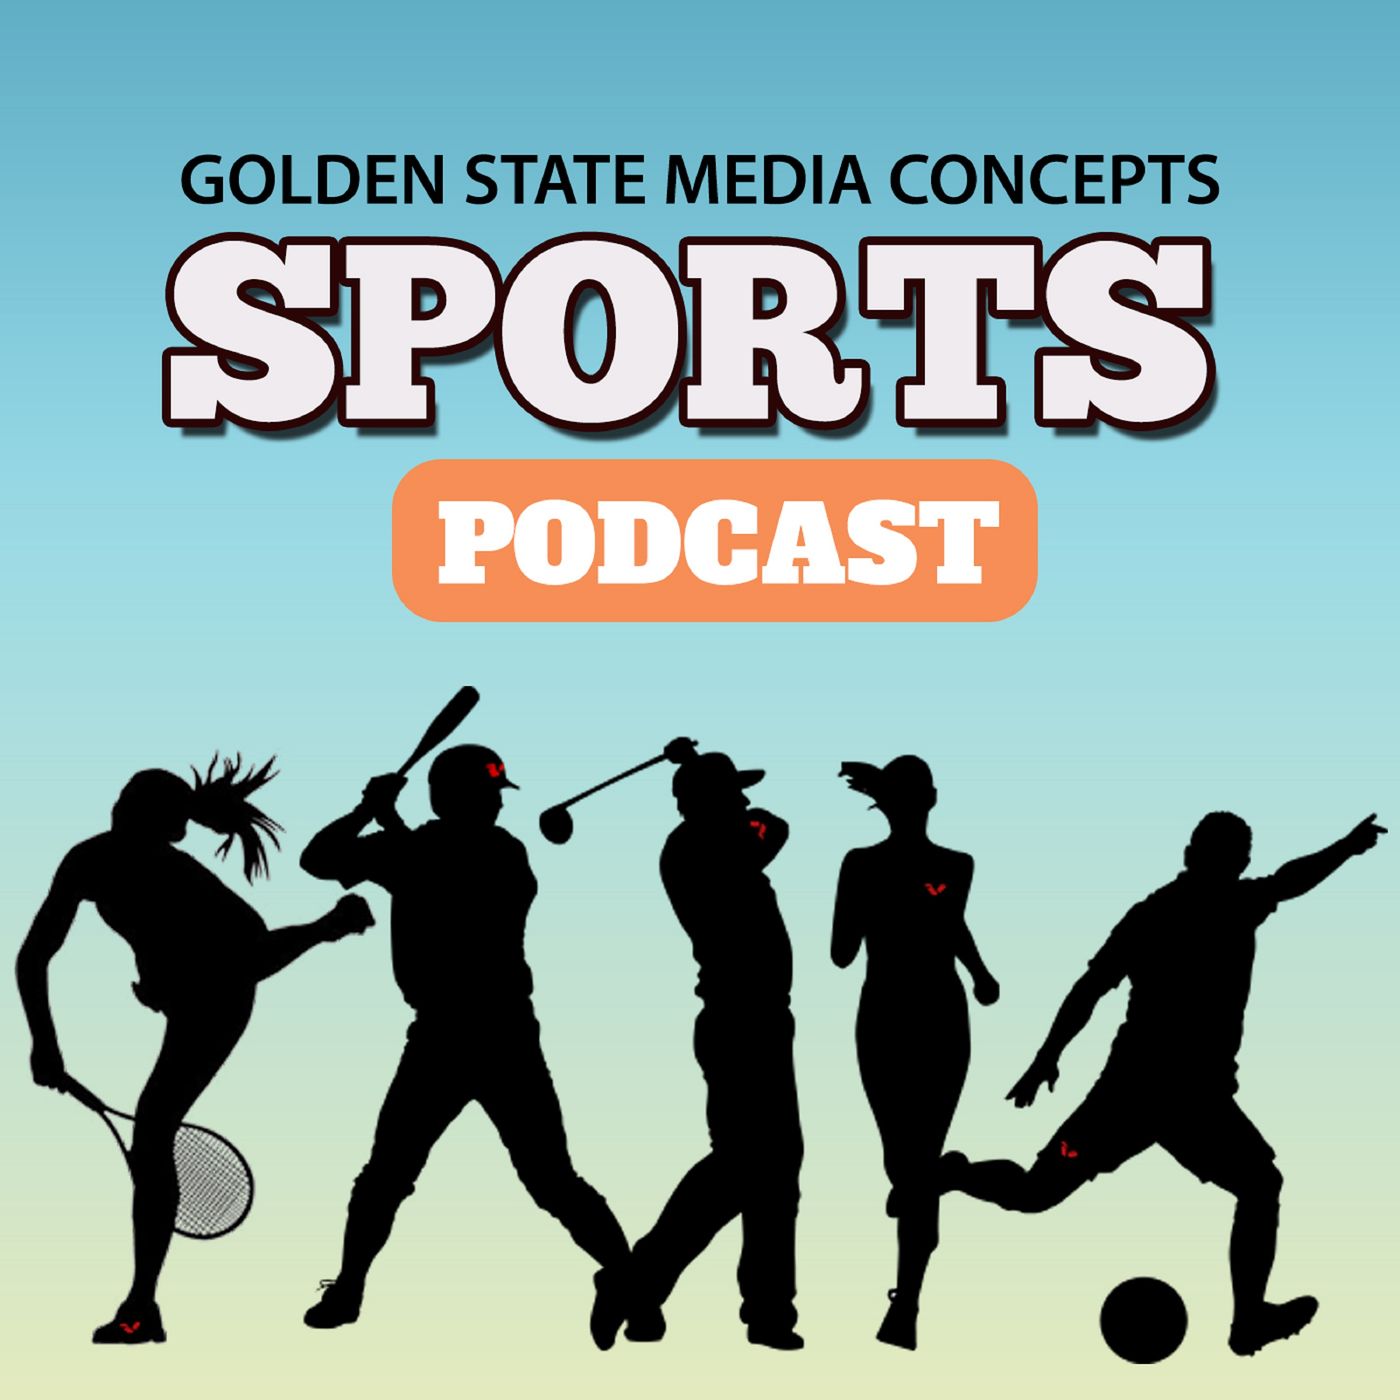 NFL Draft Surprises & NBA Playoff Sparks | GSMC Sports Podcast